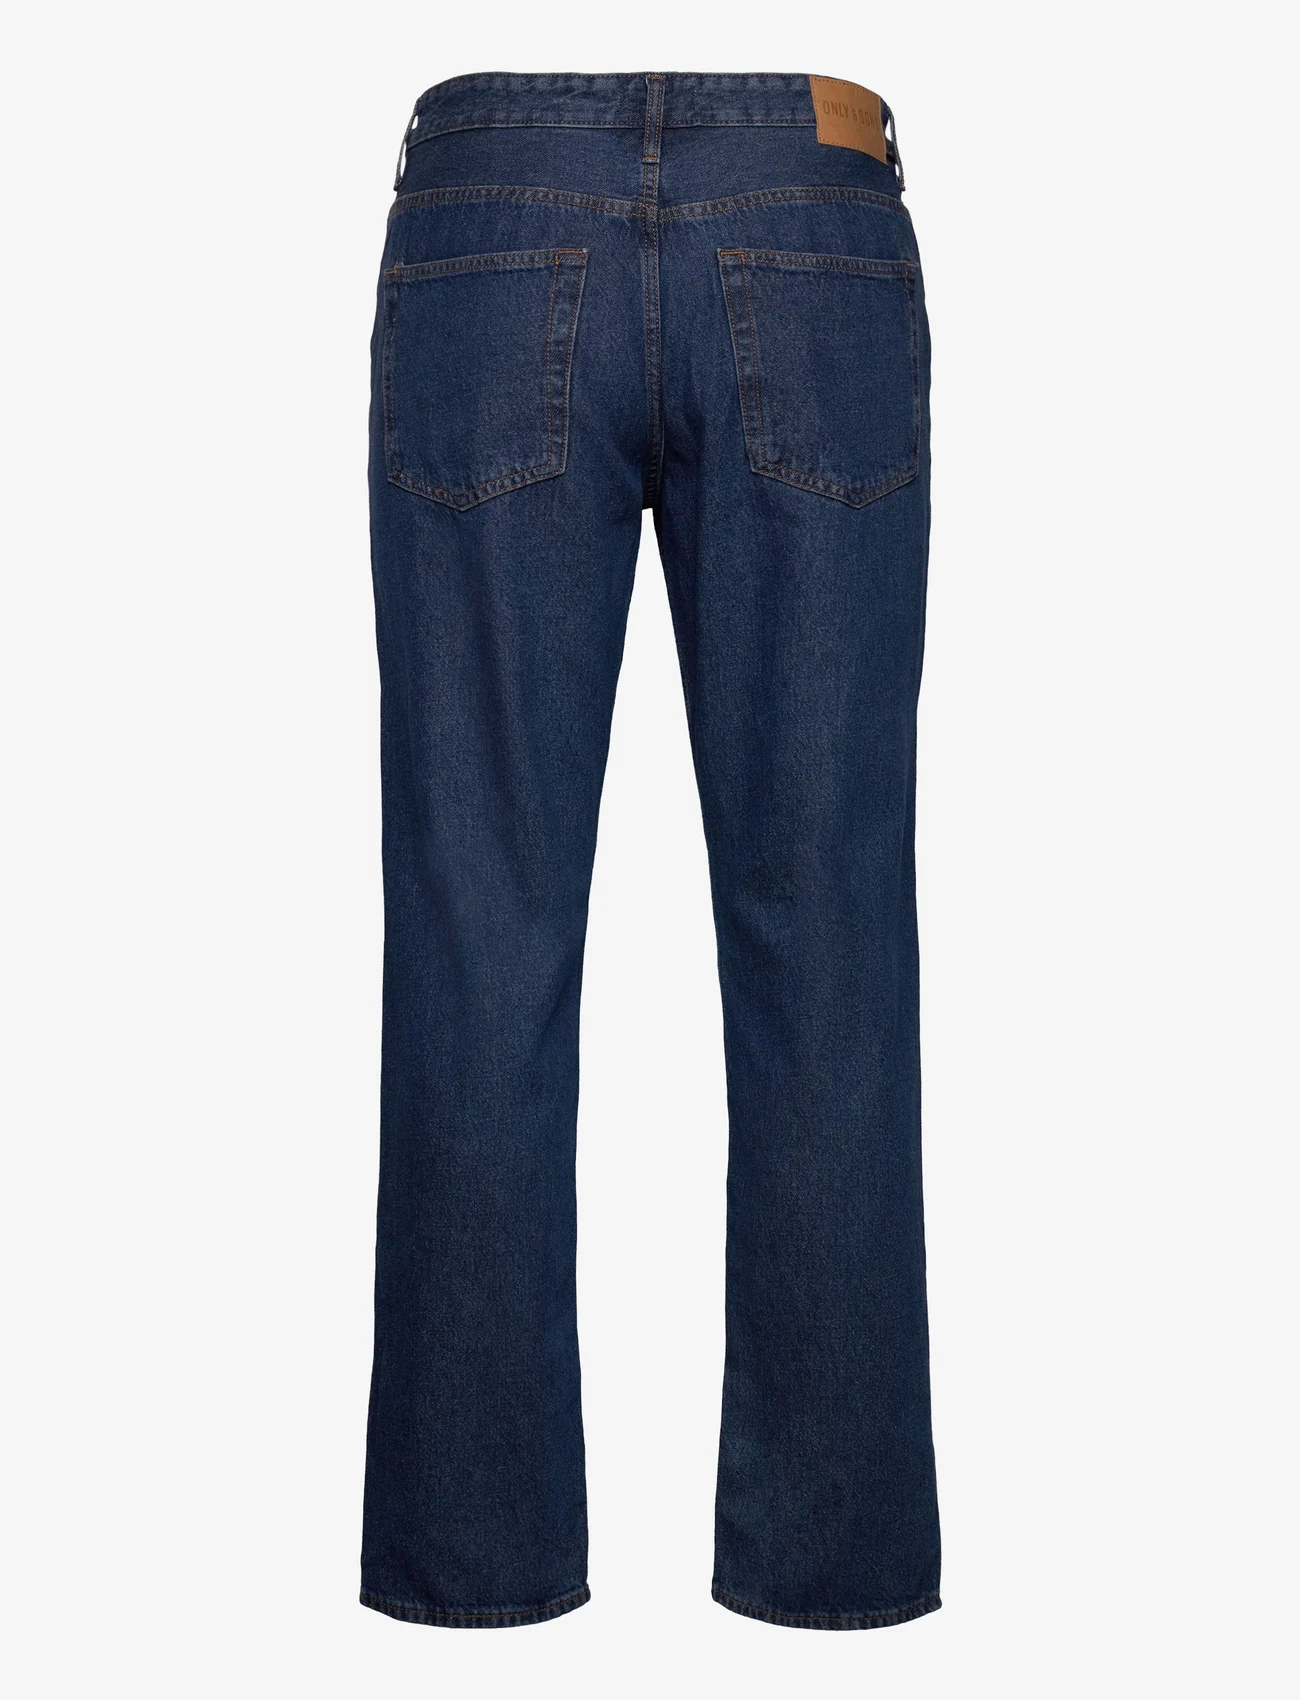 ONLY & SONS - ONEDGE LOOSE DNM BOX 4651 - loose jeans - medium blue denim - 1